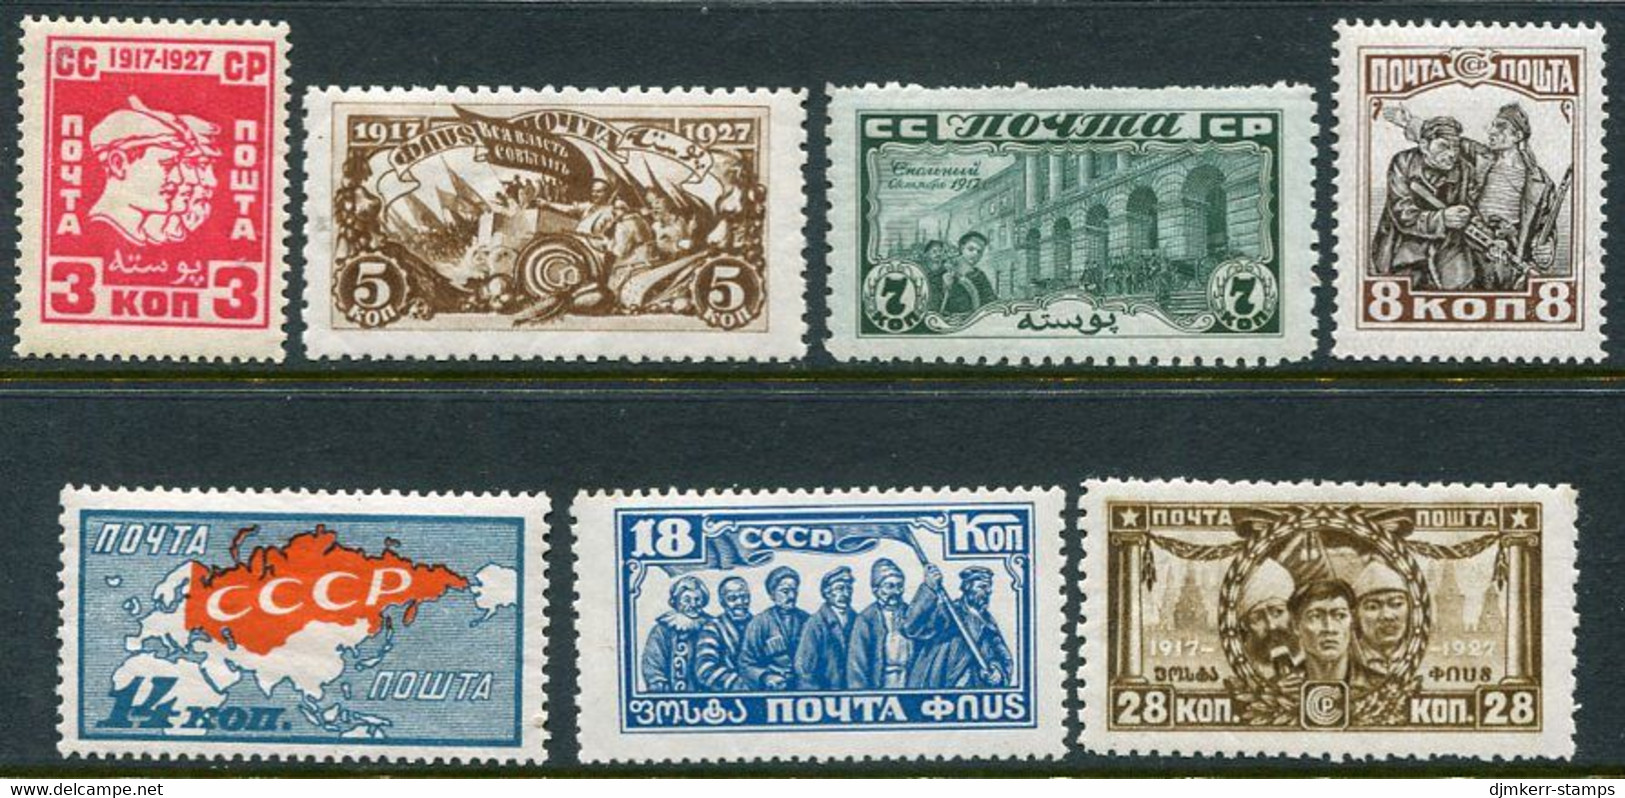 SOVIET UNION 1927 October Revolution (perforation Faults On 7 K.) MNH / **.  Michel 328-34 - Ungebraucht